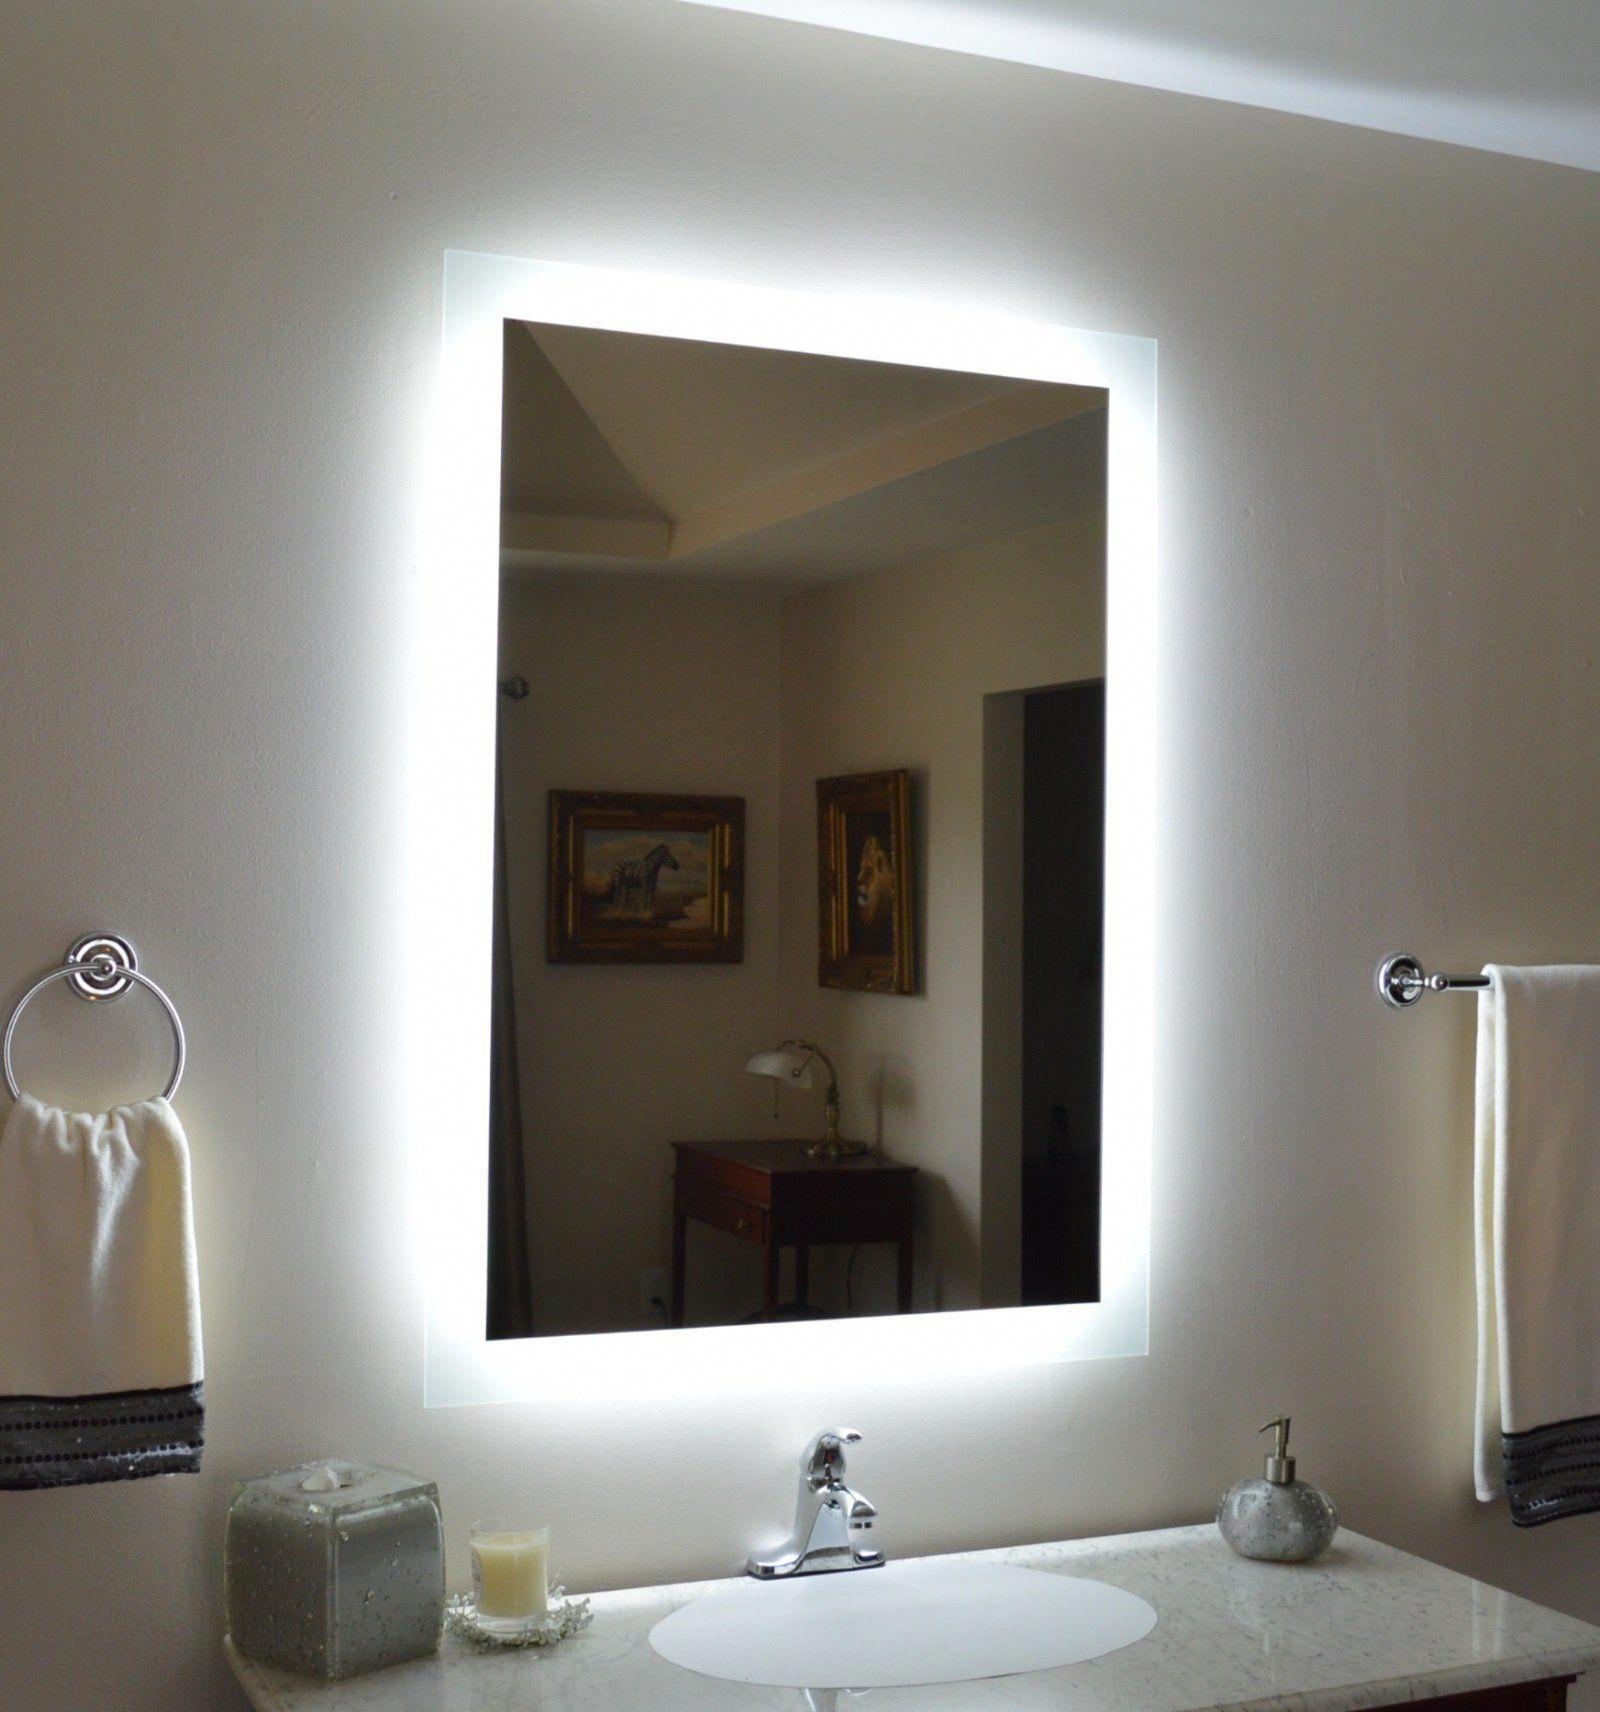 Led Vanity Mirror Visualhunt, Best Wall Vanity Mirror With Lights